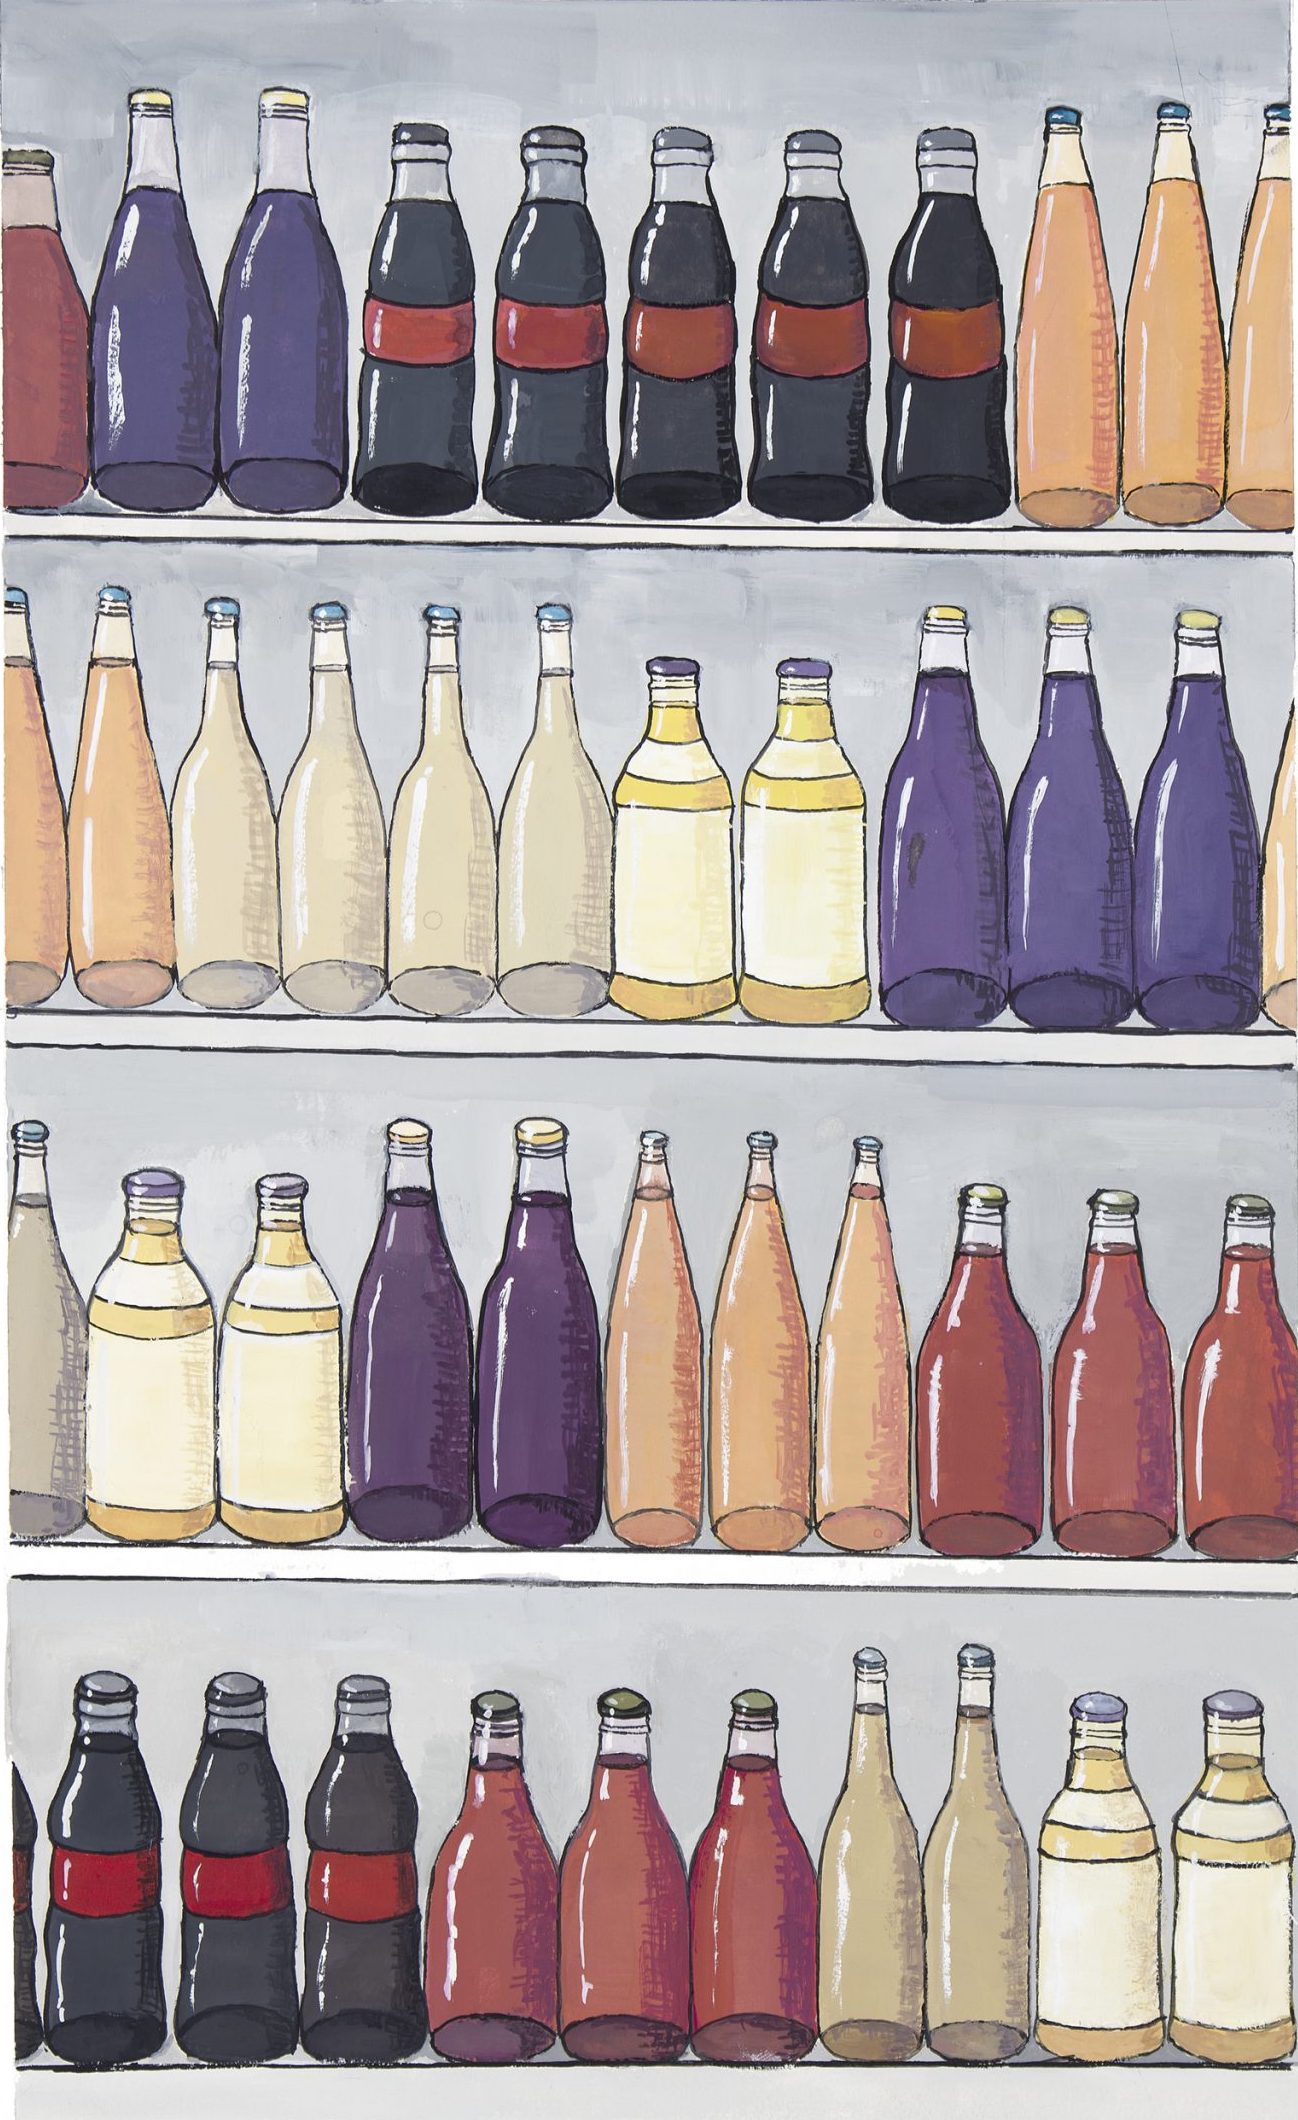 Soda bottles in Judd's store